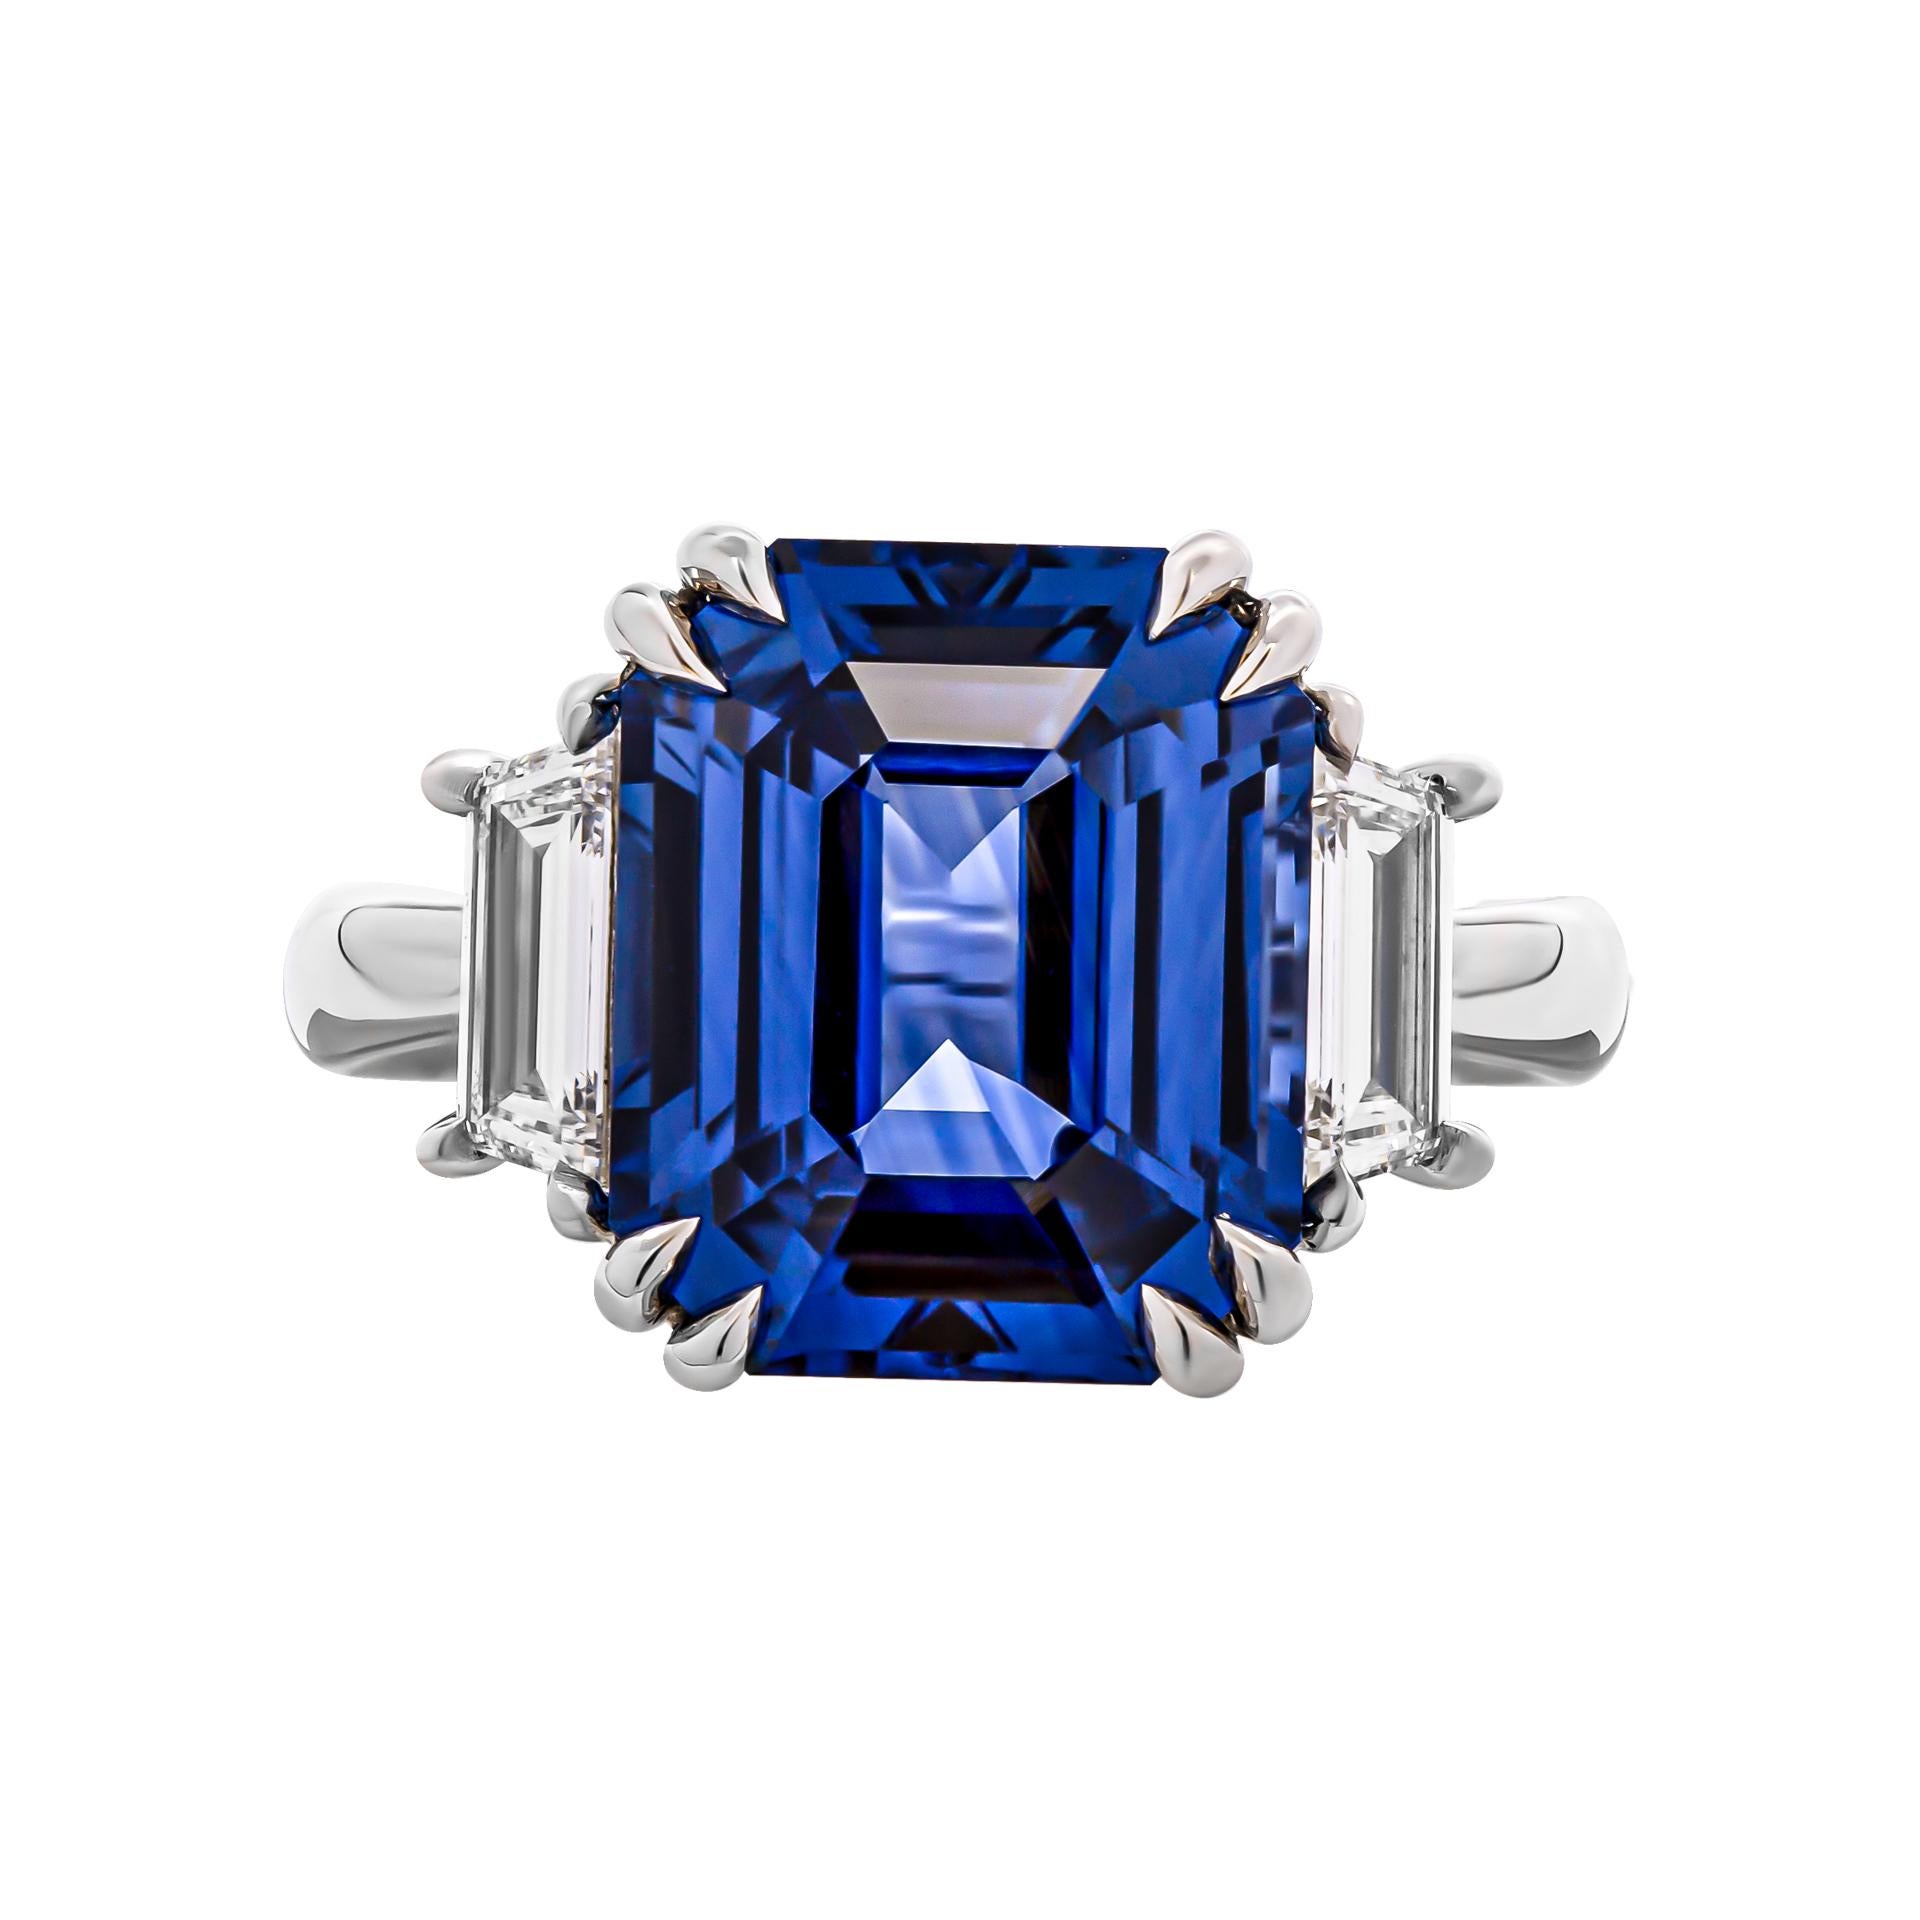 3 stone ring in Platinum
Center stone:  7.97ct Blue Emerald cut Sapphire 
Certified: CDC2201543 
Country of origin: Sri Lanka 
Side stones: 0.66ct F VVS trapezoids
Size: 6.5